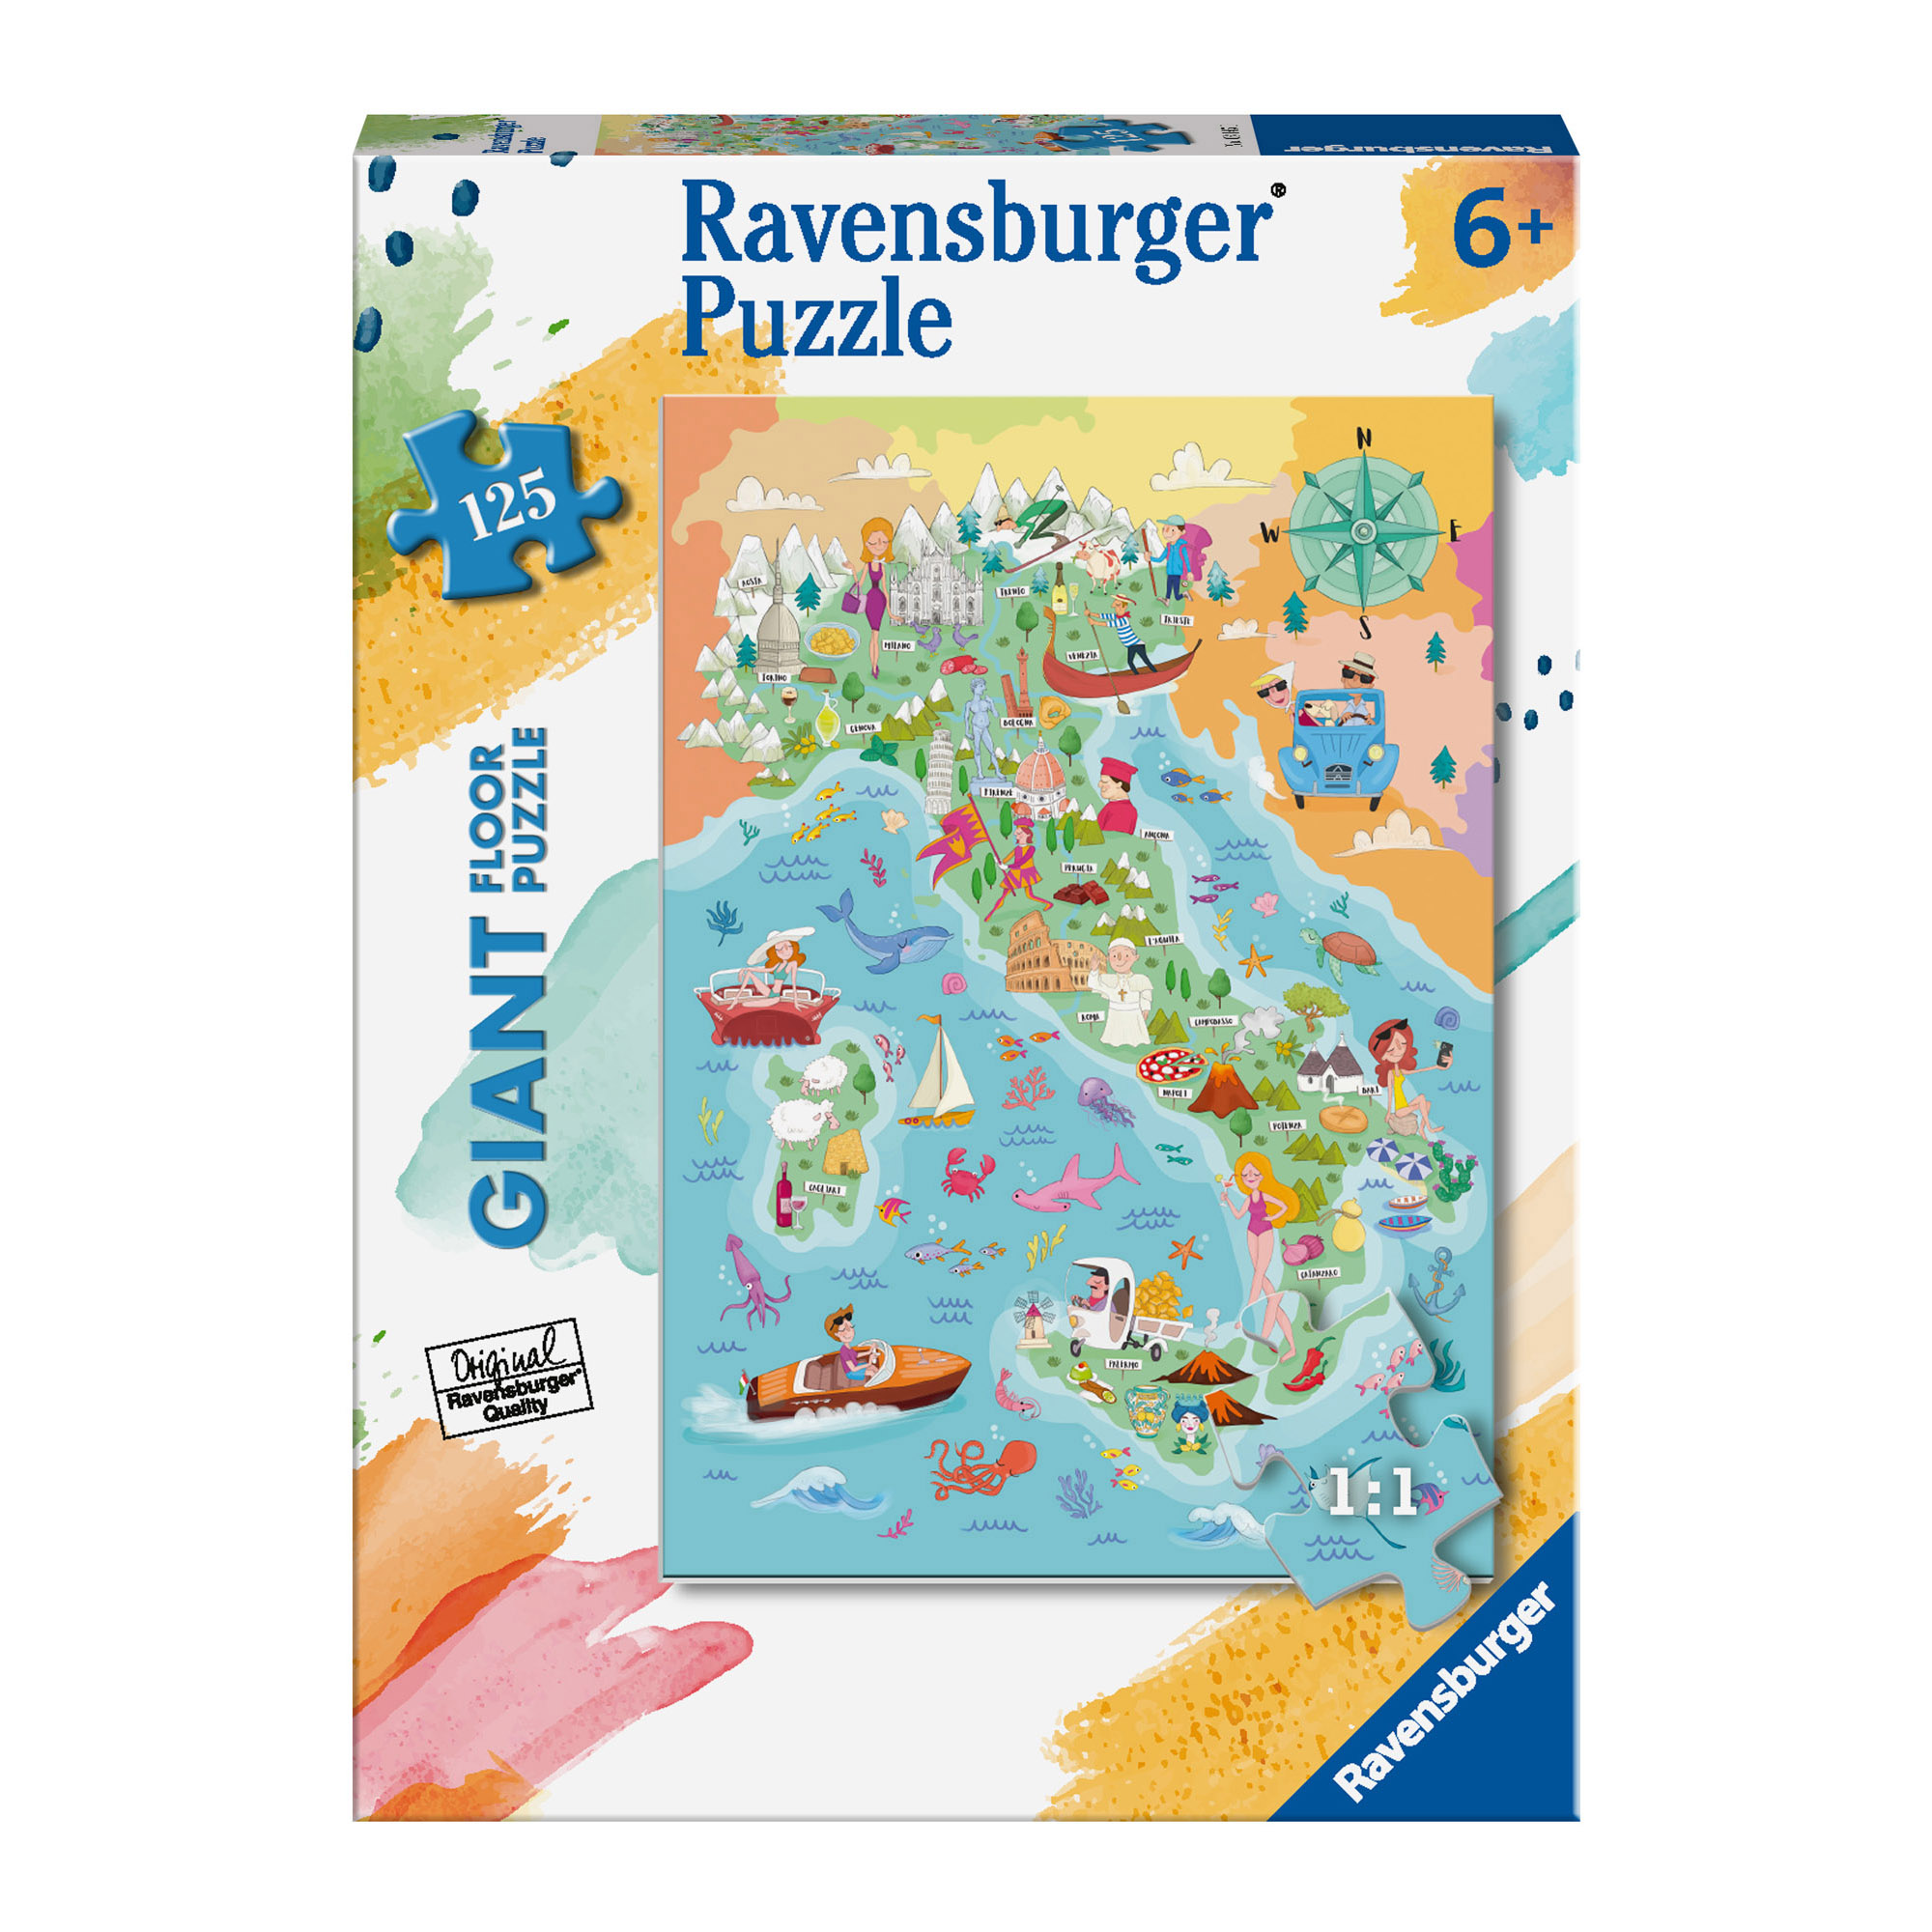 Ravensburger - puzzle mappa dell'italia, collezione 125 giant pavimento, 125 pezzi, età raccomandata 6+ anni - RAVENSBURGER